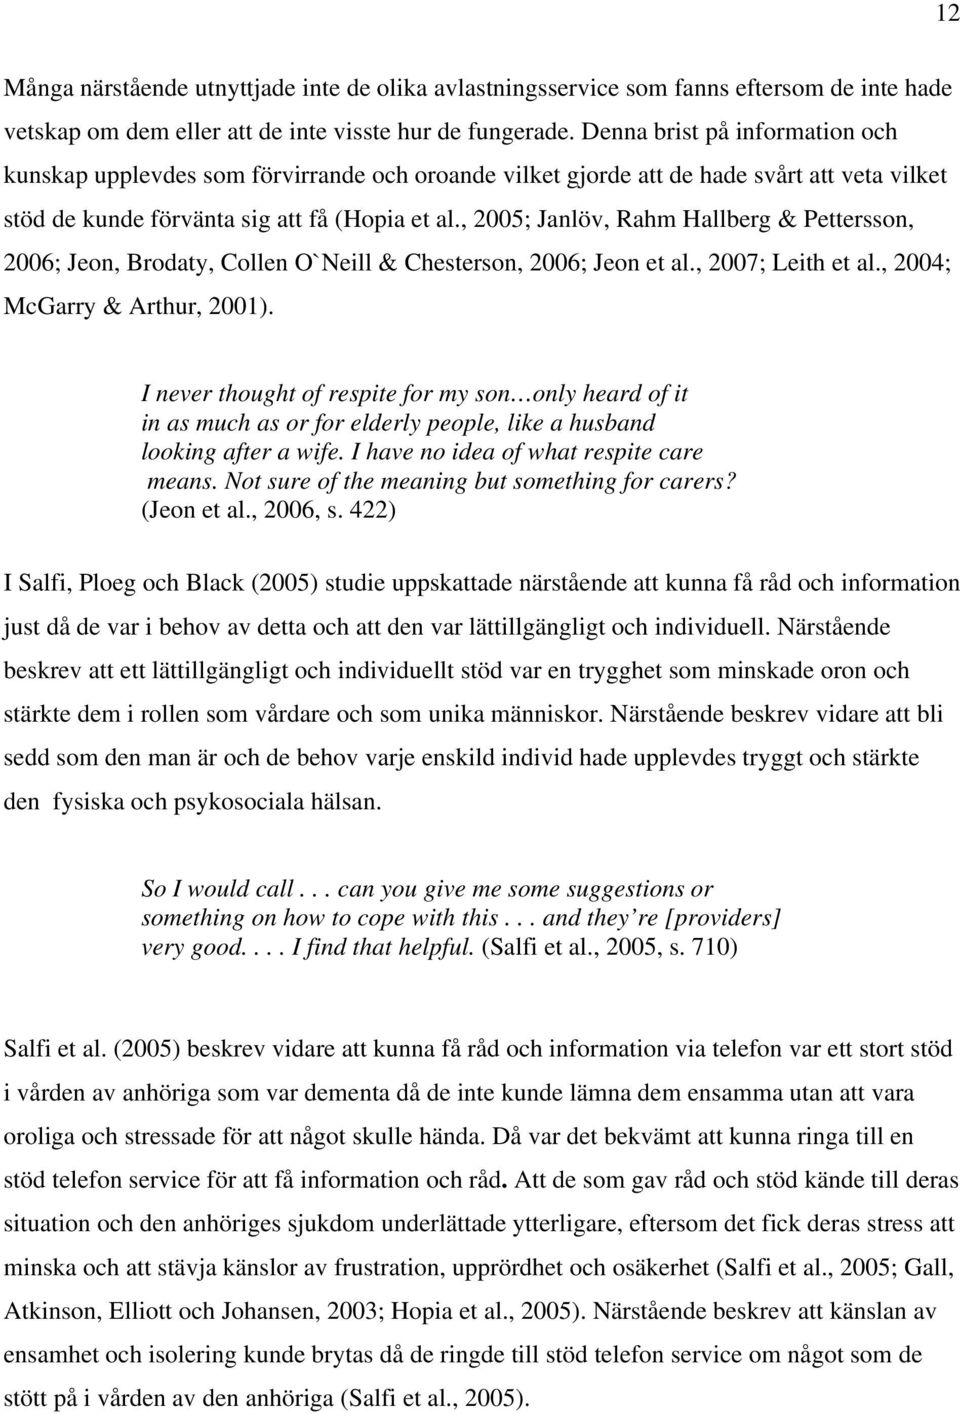 , 2005; Janlöv, Rahm Hallberg & Pettersson, 2006; Jeon, Brodaty, Collen O`Neill & Chesterson, 2006; Jeon et al., 2007; Leith et al., 2004; McGarry & Arthur, 2001).